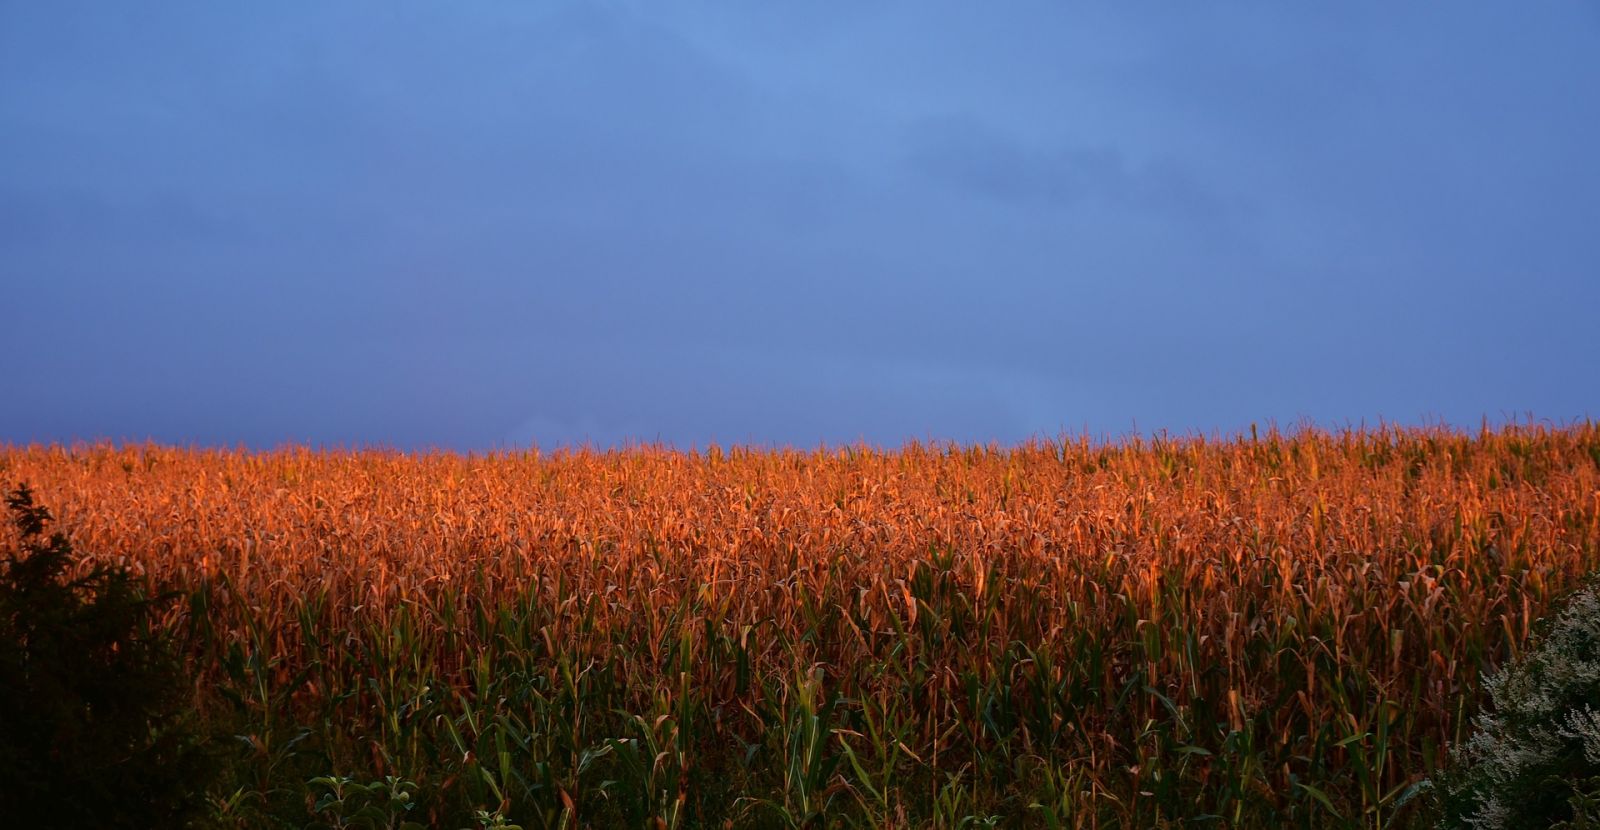 Sunset over corn field by RitaE via Pixabay